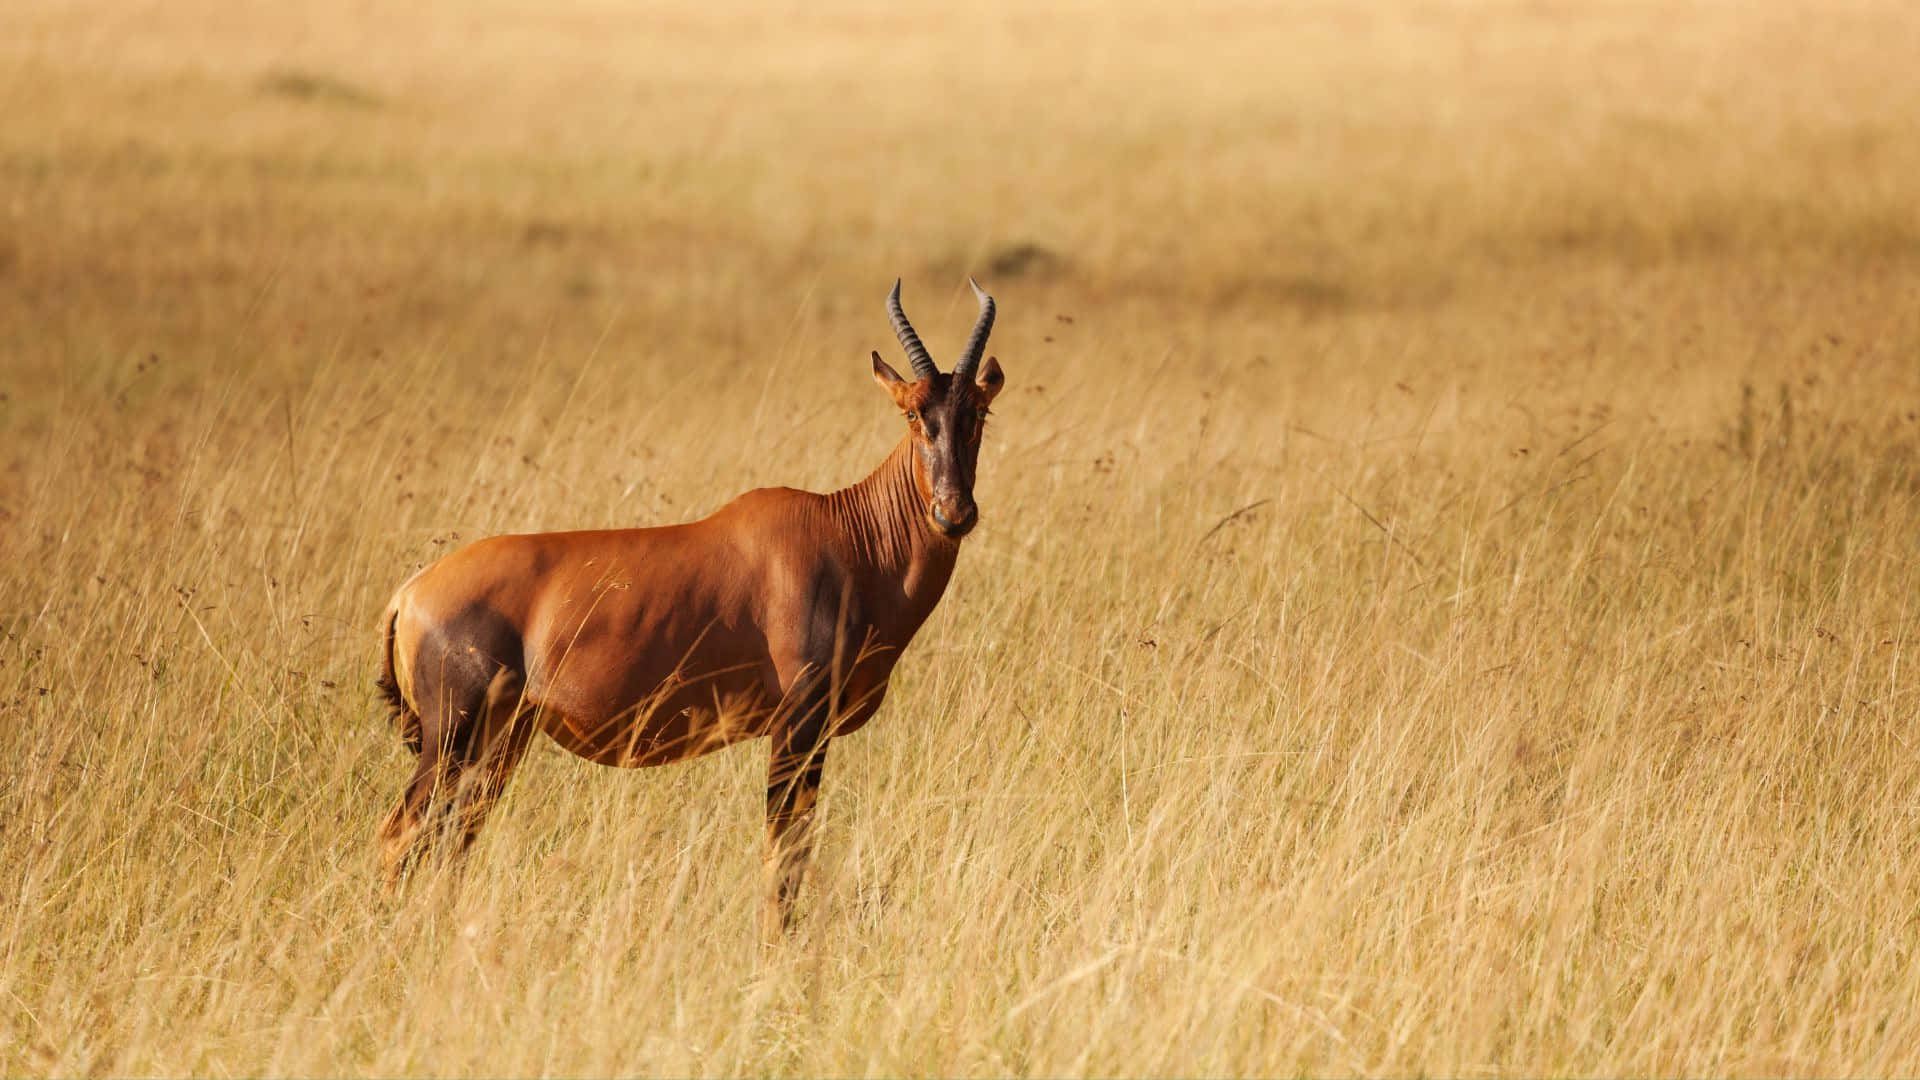 Topi Antelopein Savannah Grasslands Wallpaper